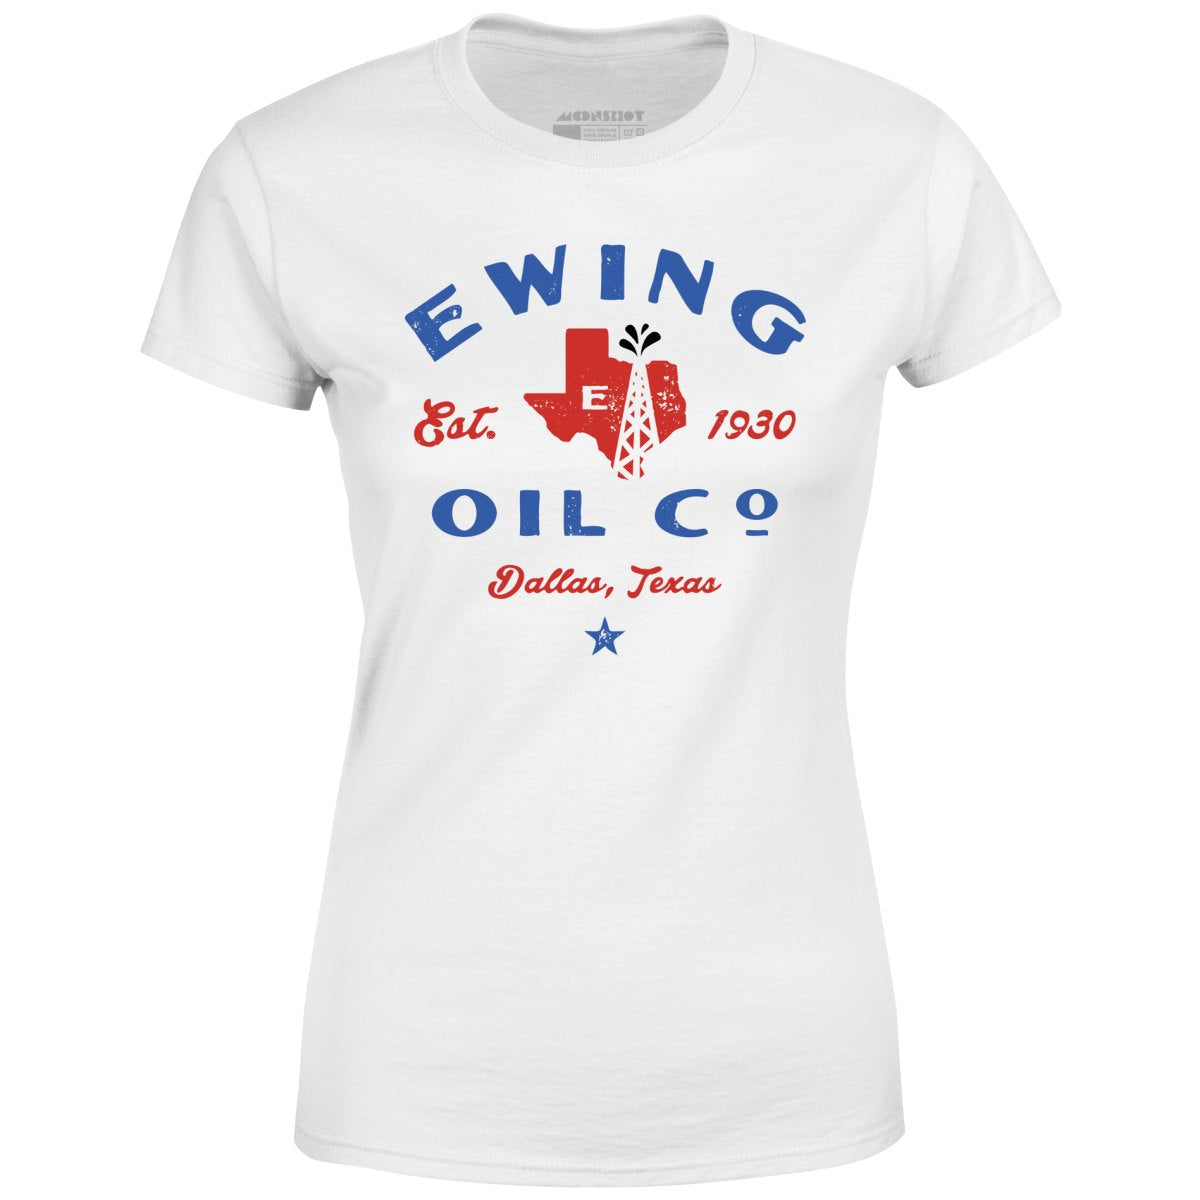 Ewing Oil Co - Dallas, Texas - Women's T-Shirt